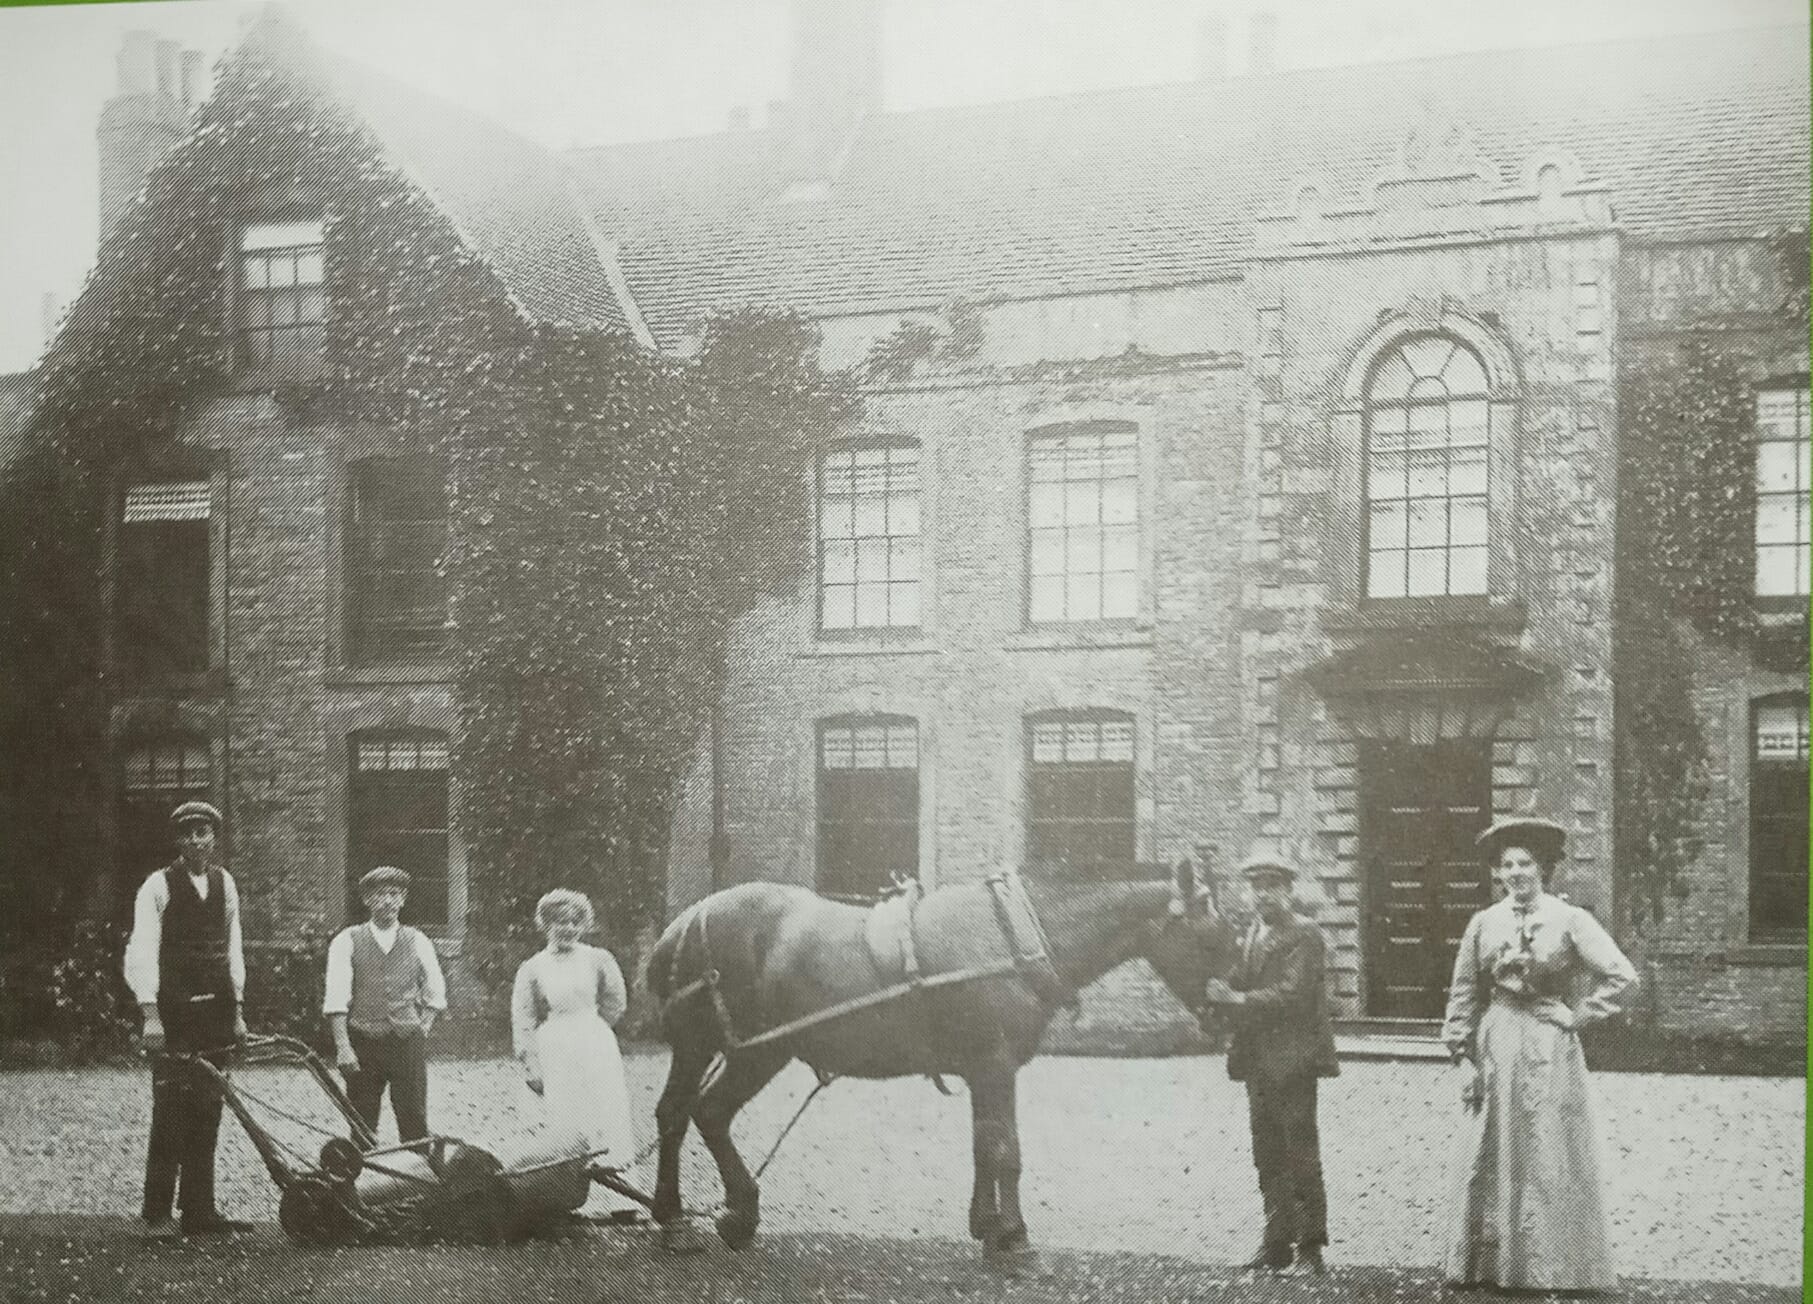 Horse drawn mower, servants, large house